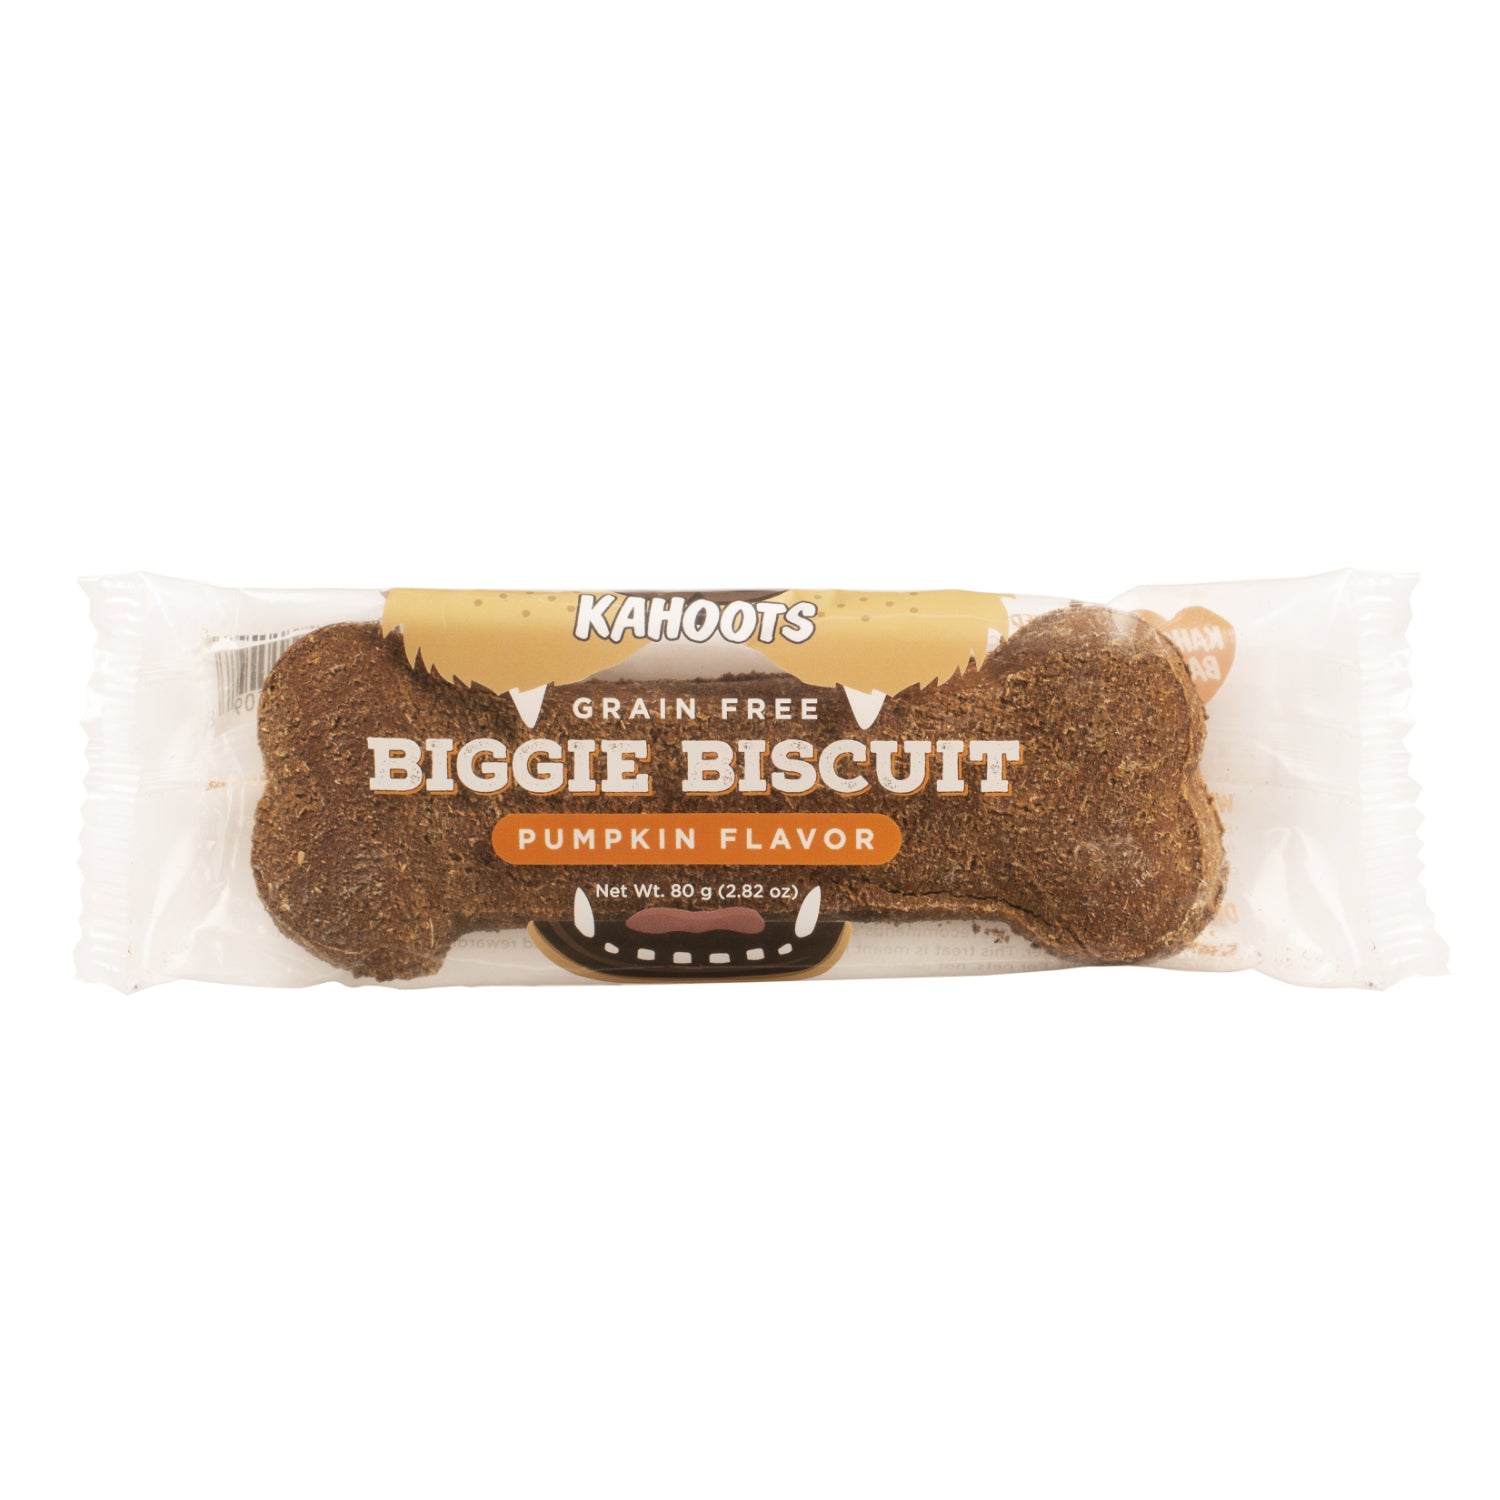 Large dog biscuit, pumpkin flavored